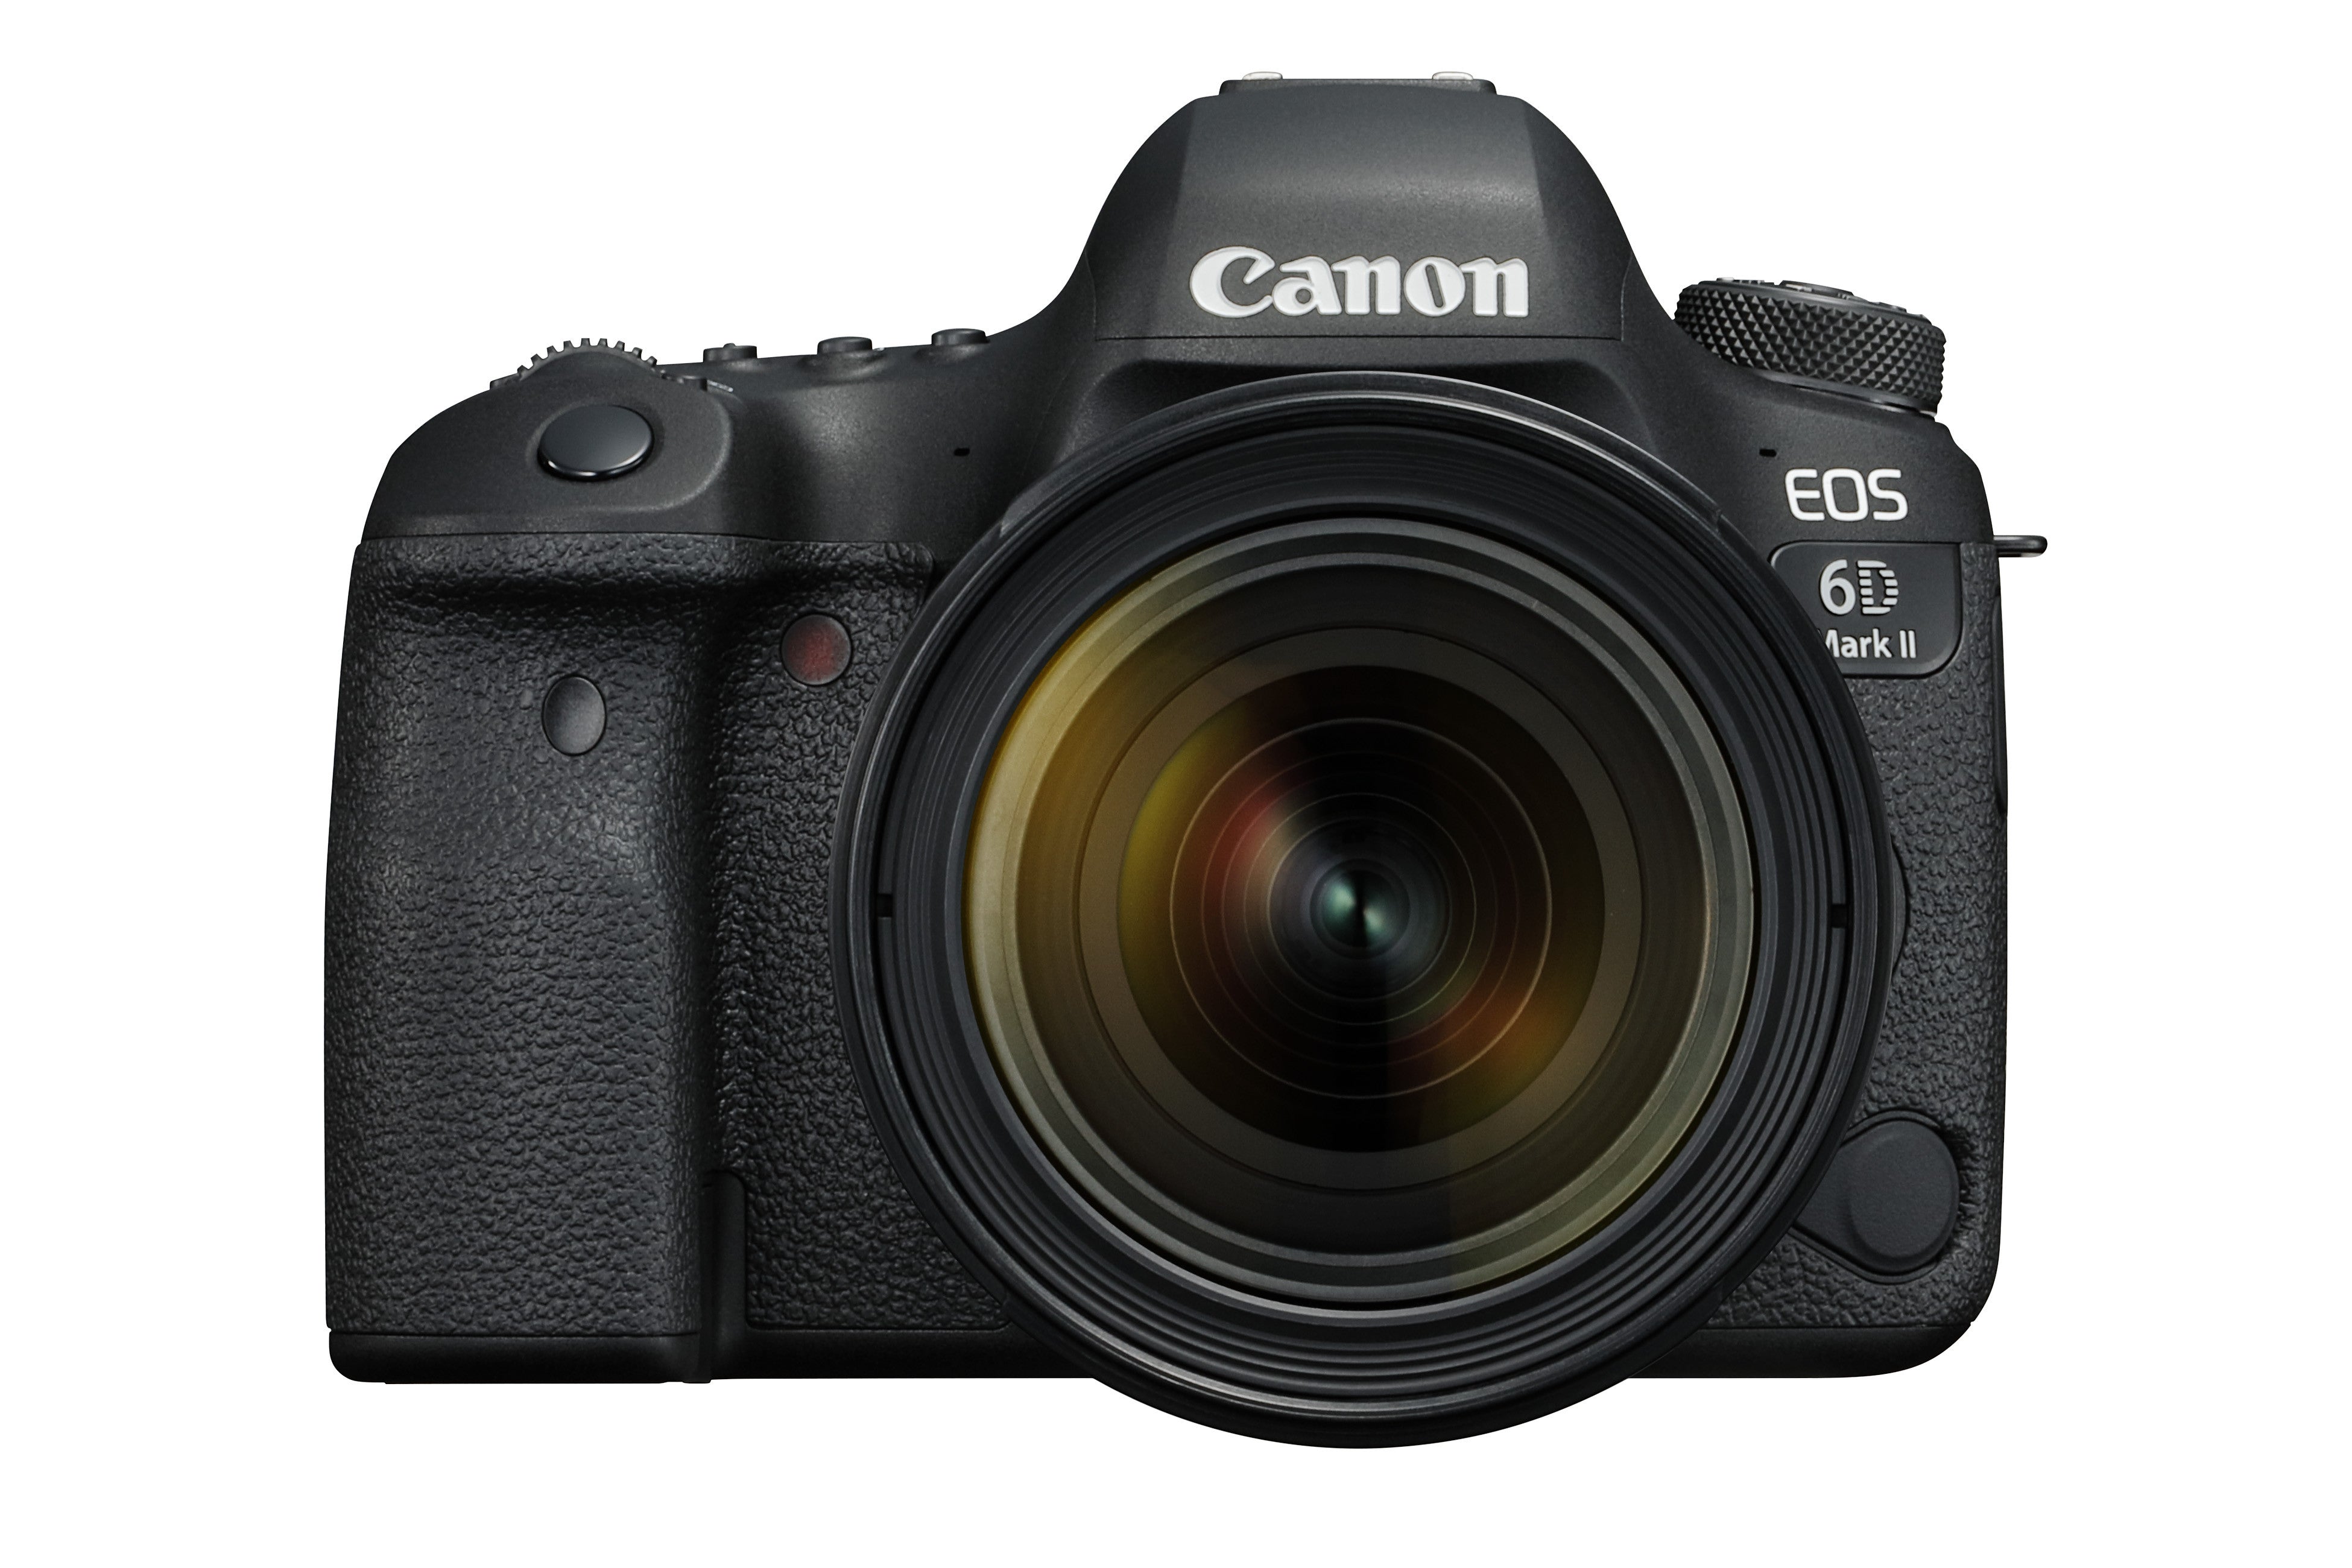 Canon EOS 6DMkII/6DMk2 Key Features